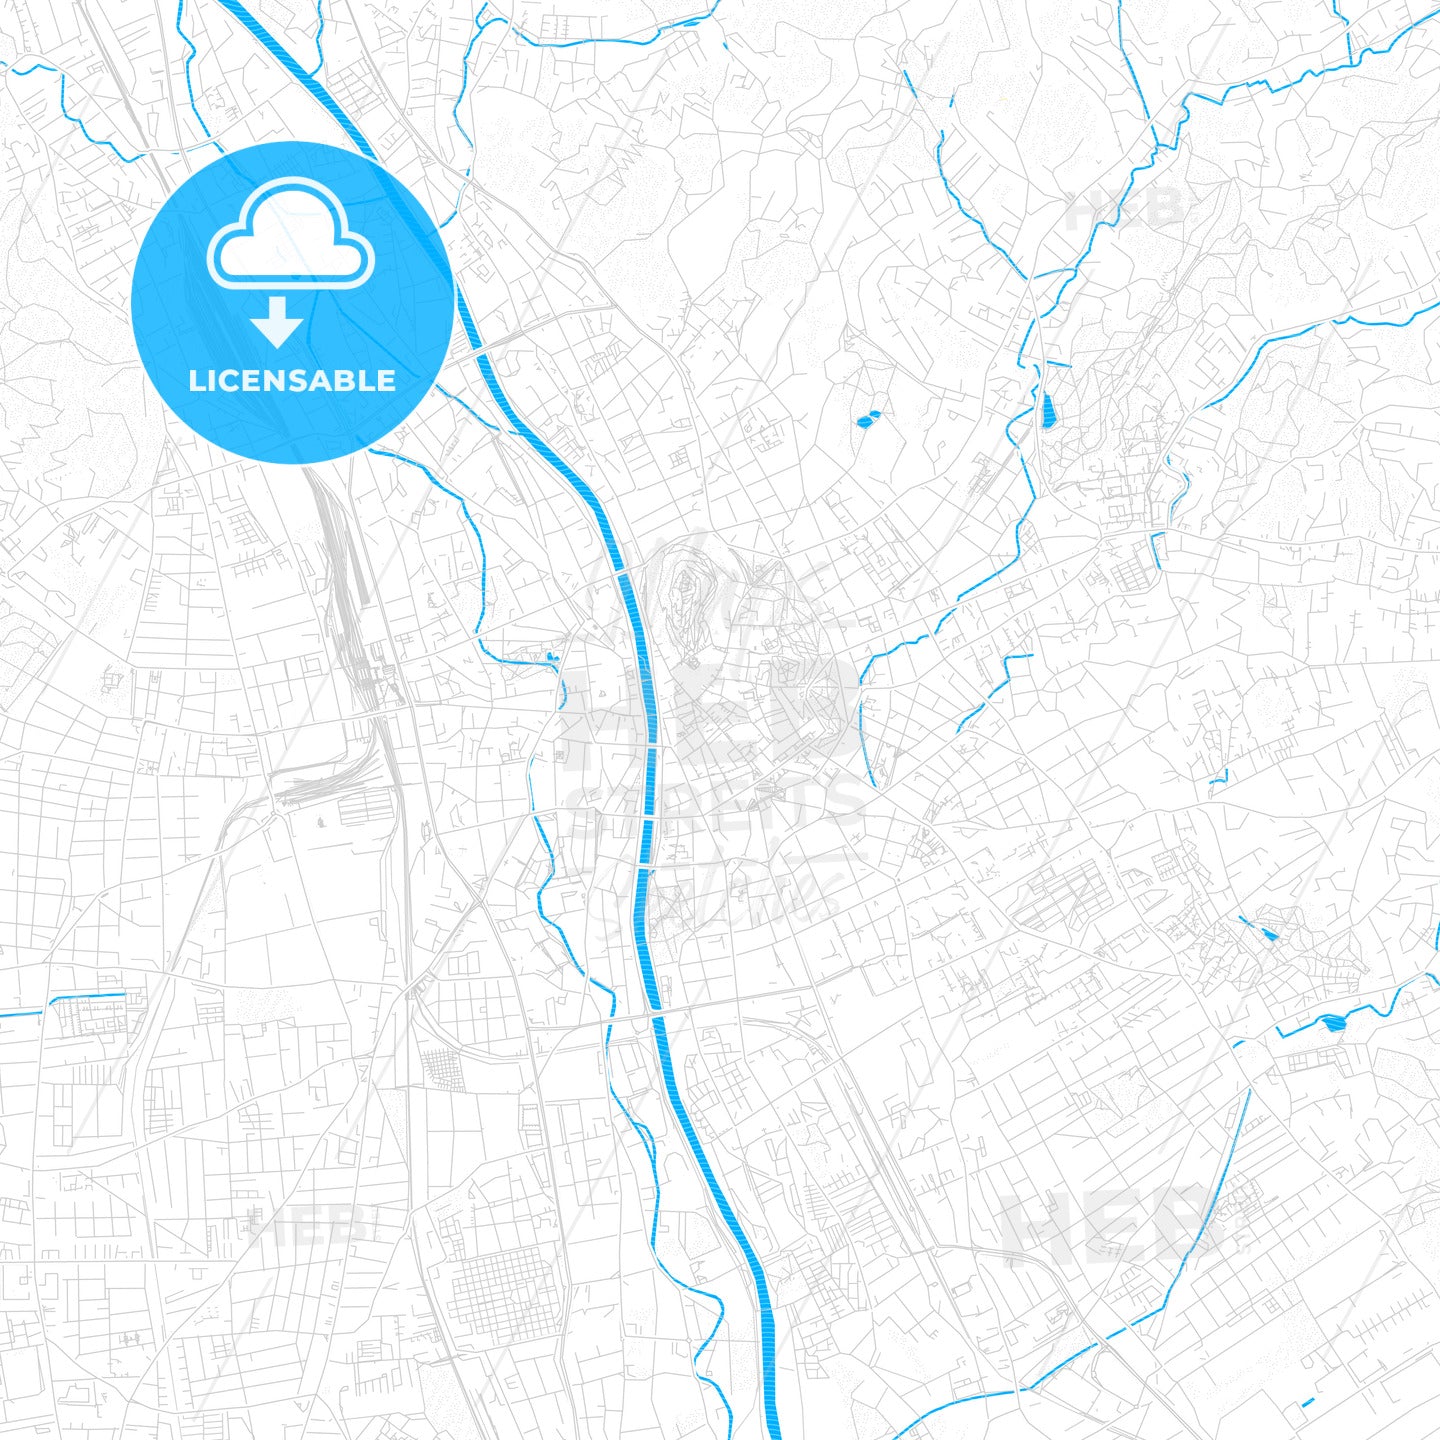 Graz, Austria PDF vector map with water in focus